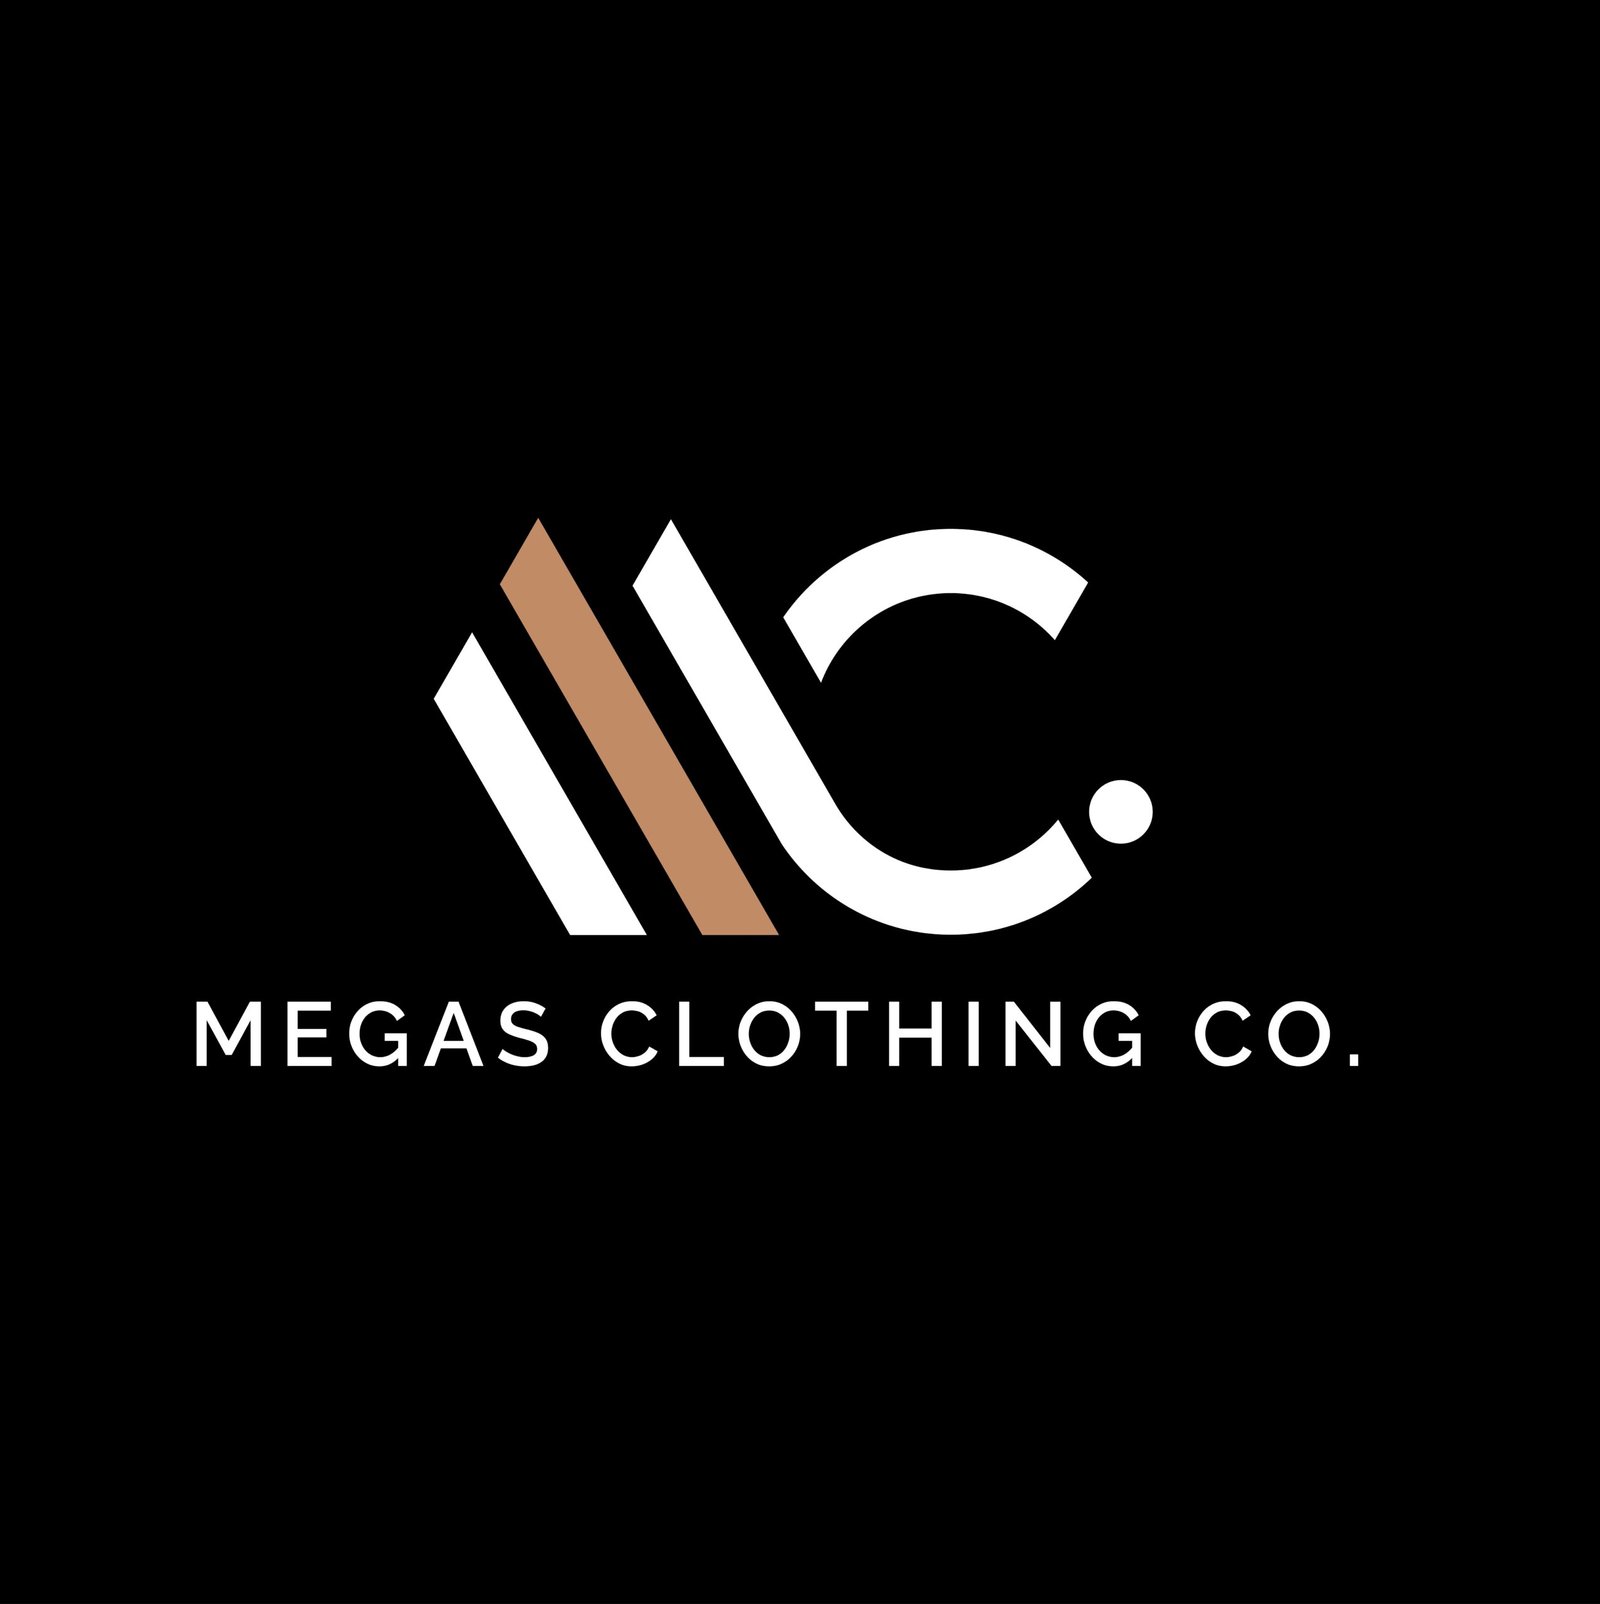 Megas Clothing Co. ltd - Thrive7 Group